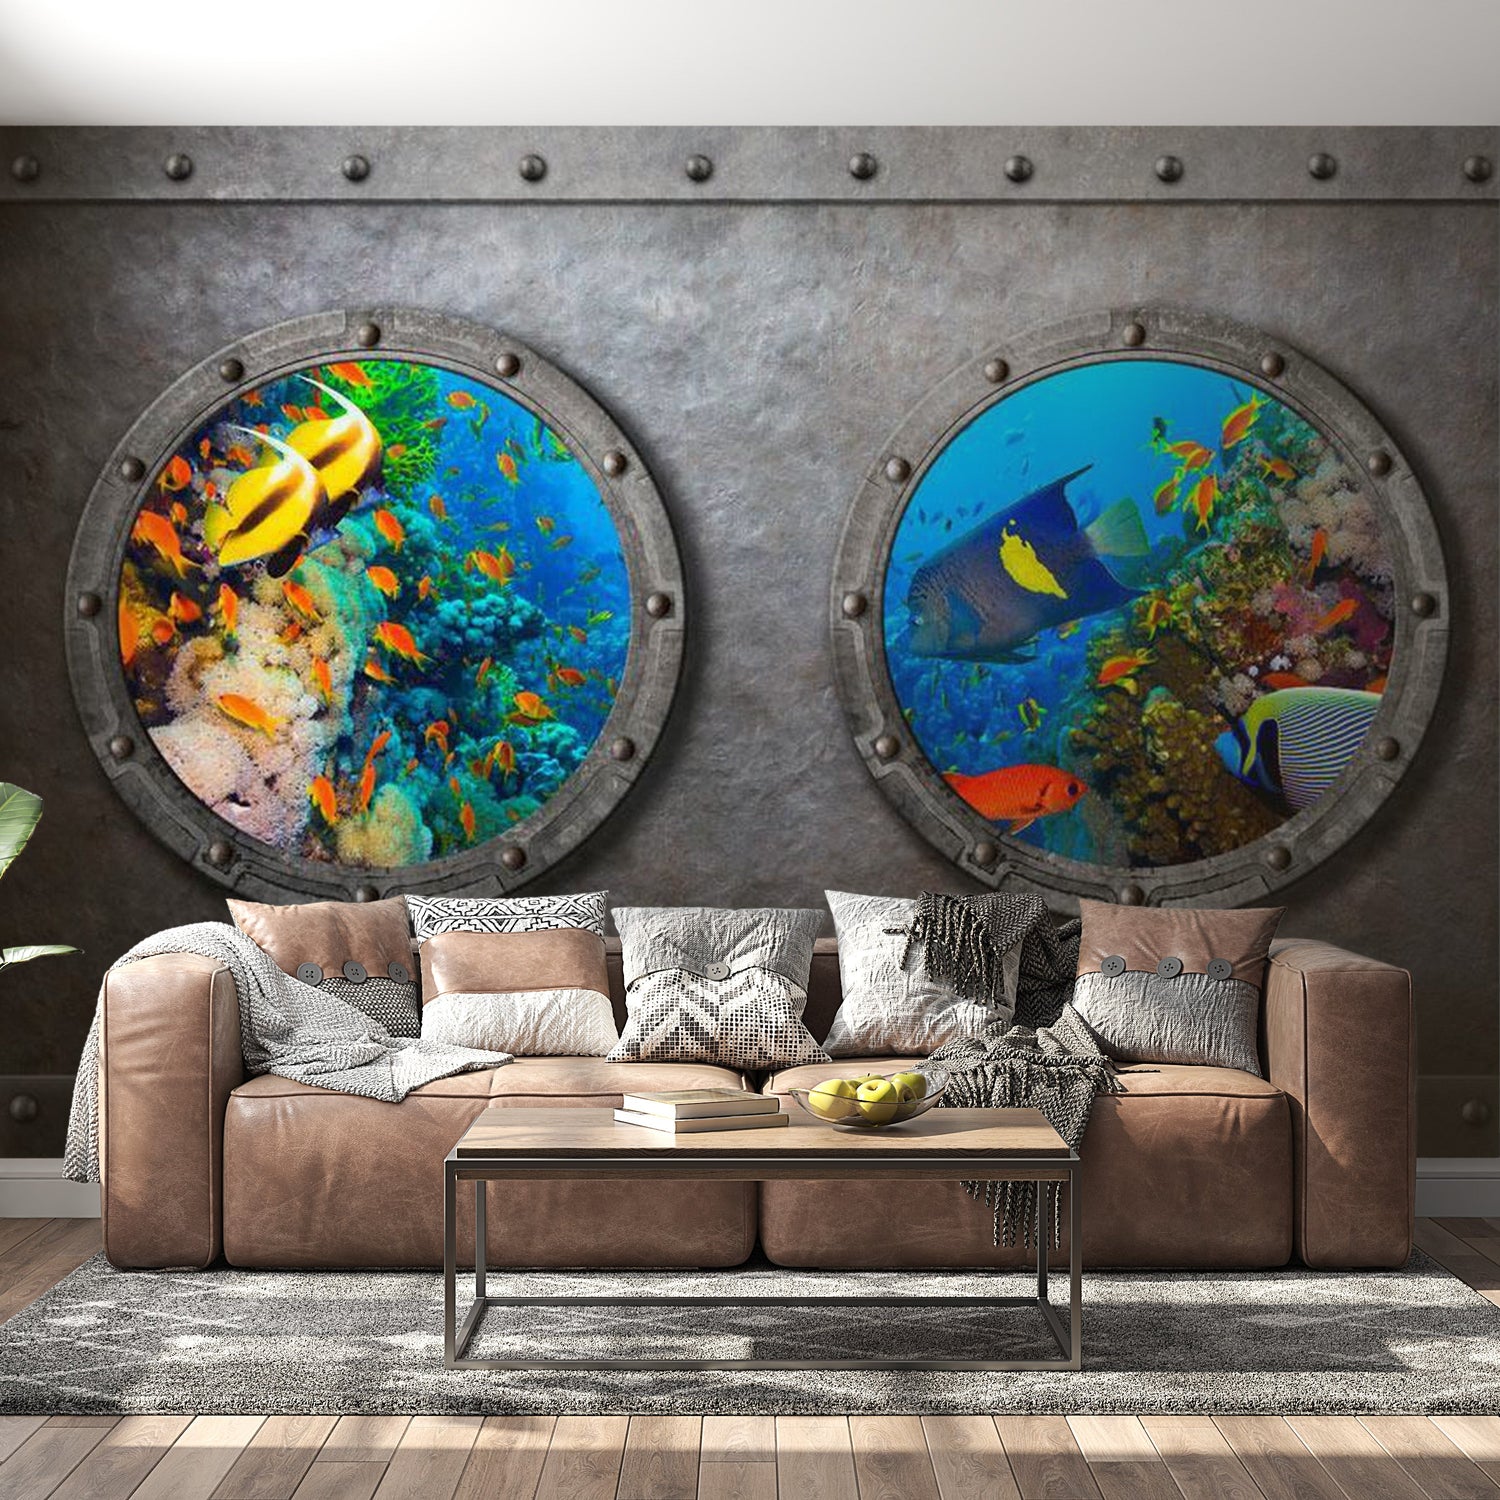 Landscape Wallpaper Wall Mural - Window To The Underwater World